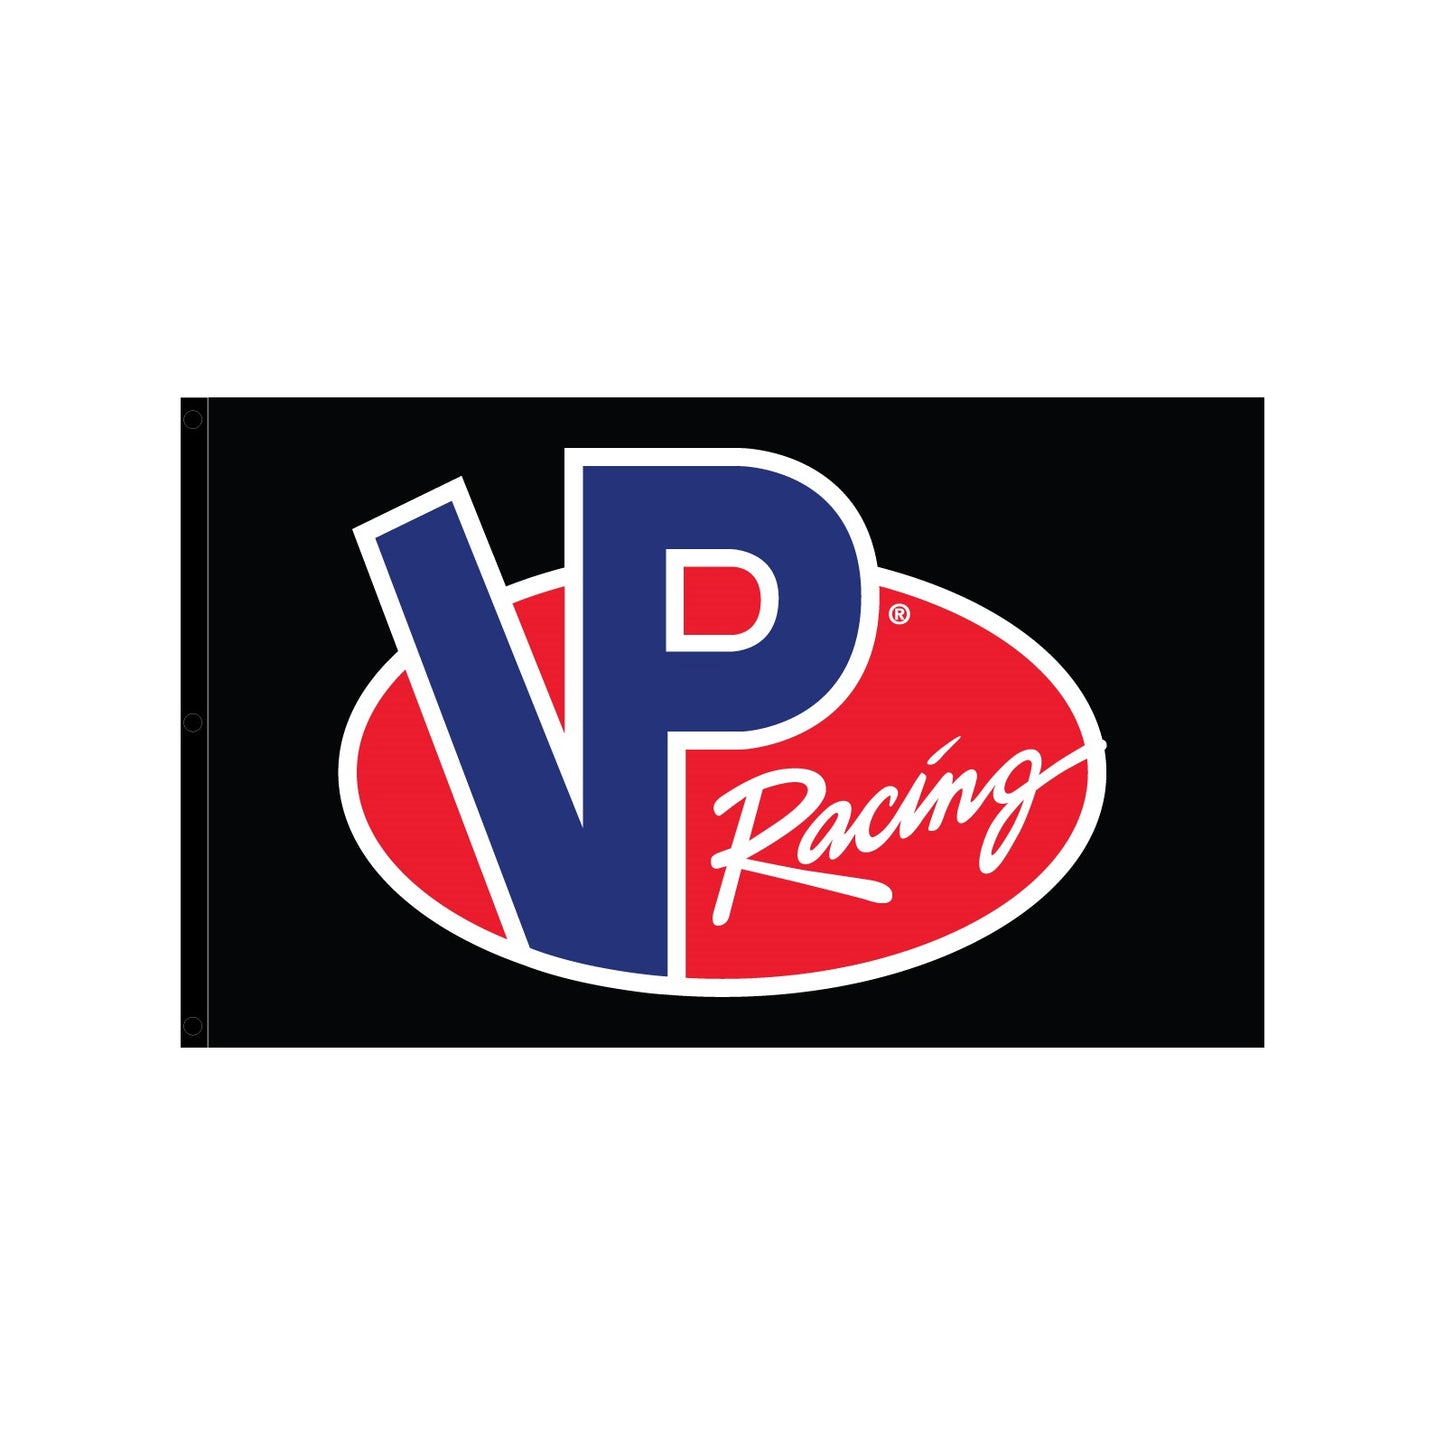 VP Racing Flag